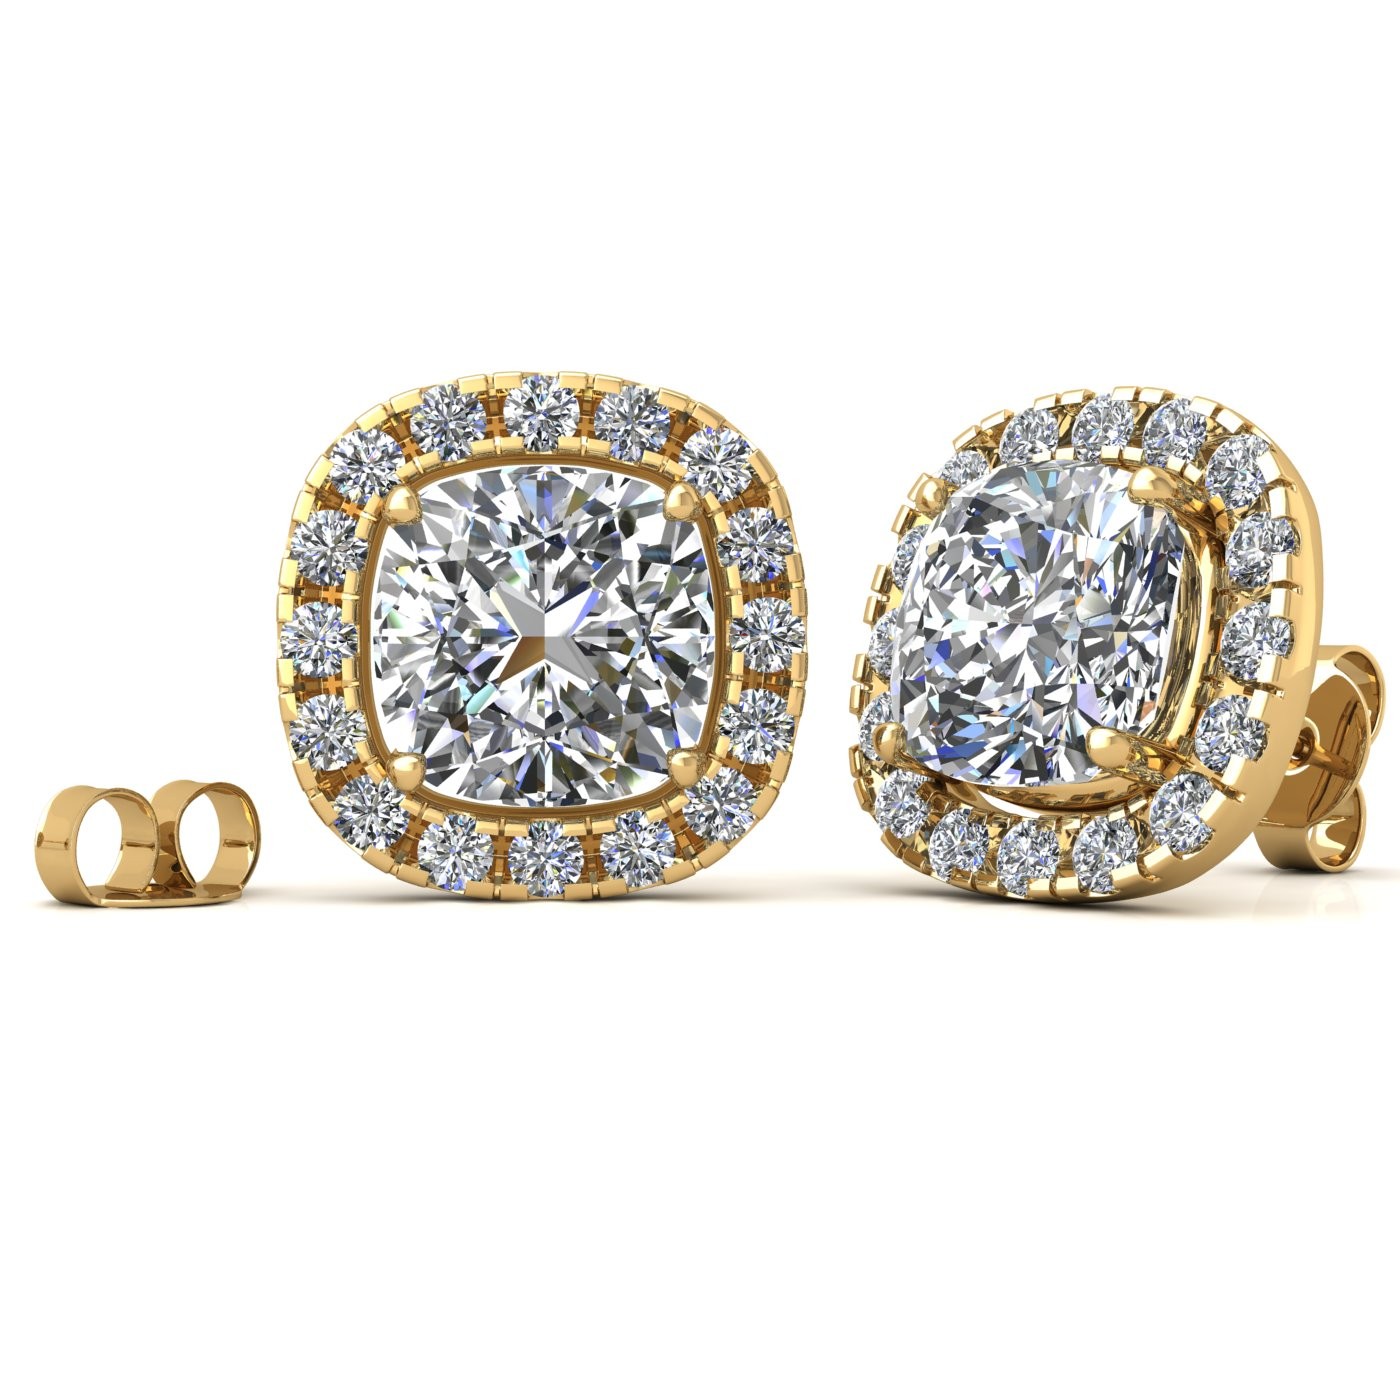 18k yellow gold  0,5 ct each (1,0 tcw) 4 prongs cushion shape diamond earrings with diamond pavÉ set halo Photos & images